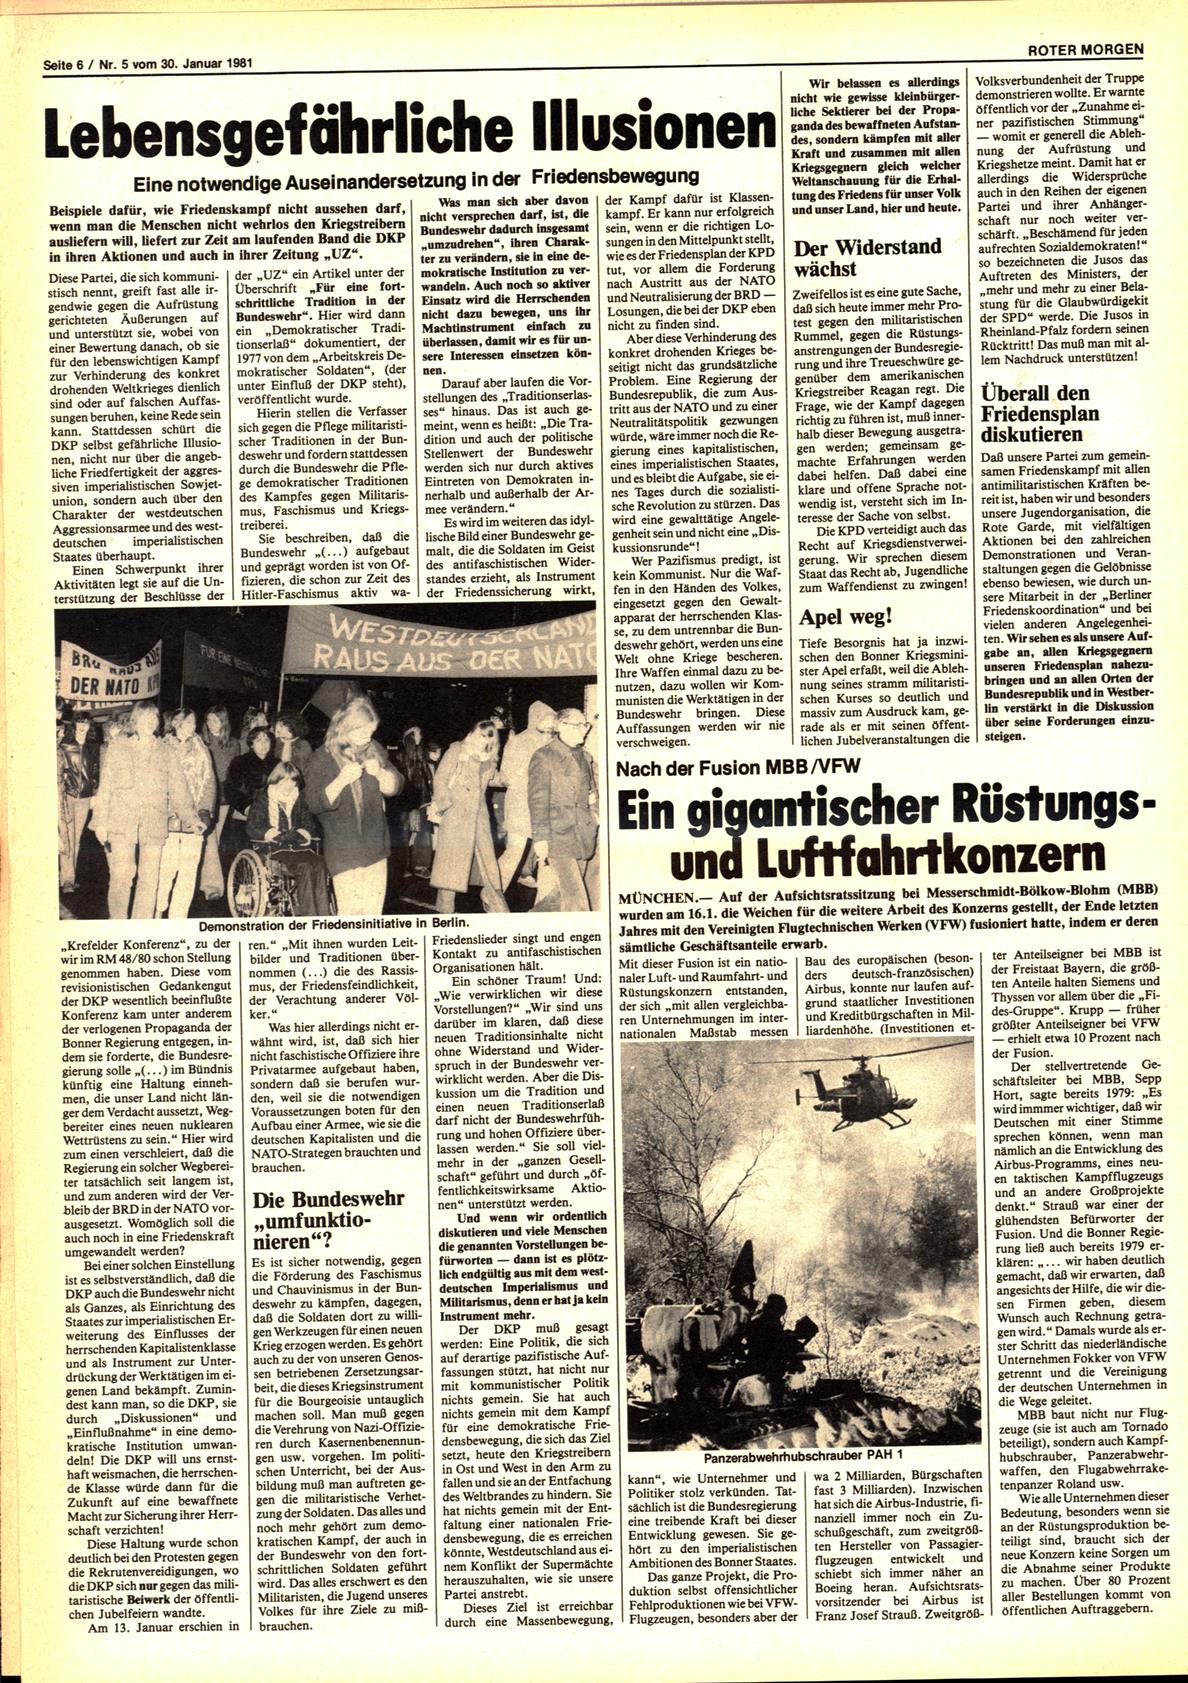 Roter Morgen, 15. Jg., 30. Januar 1981, Nr. 5, Seite 6